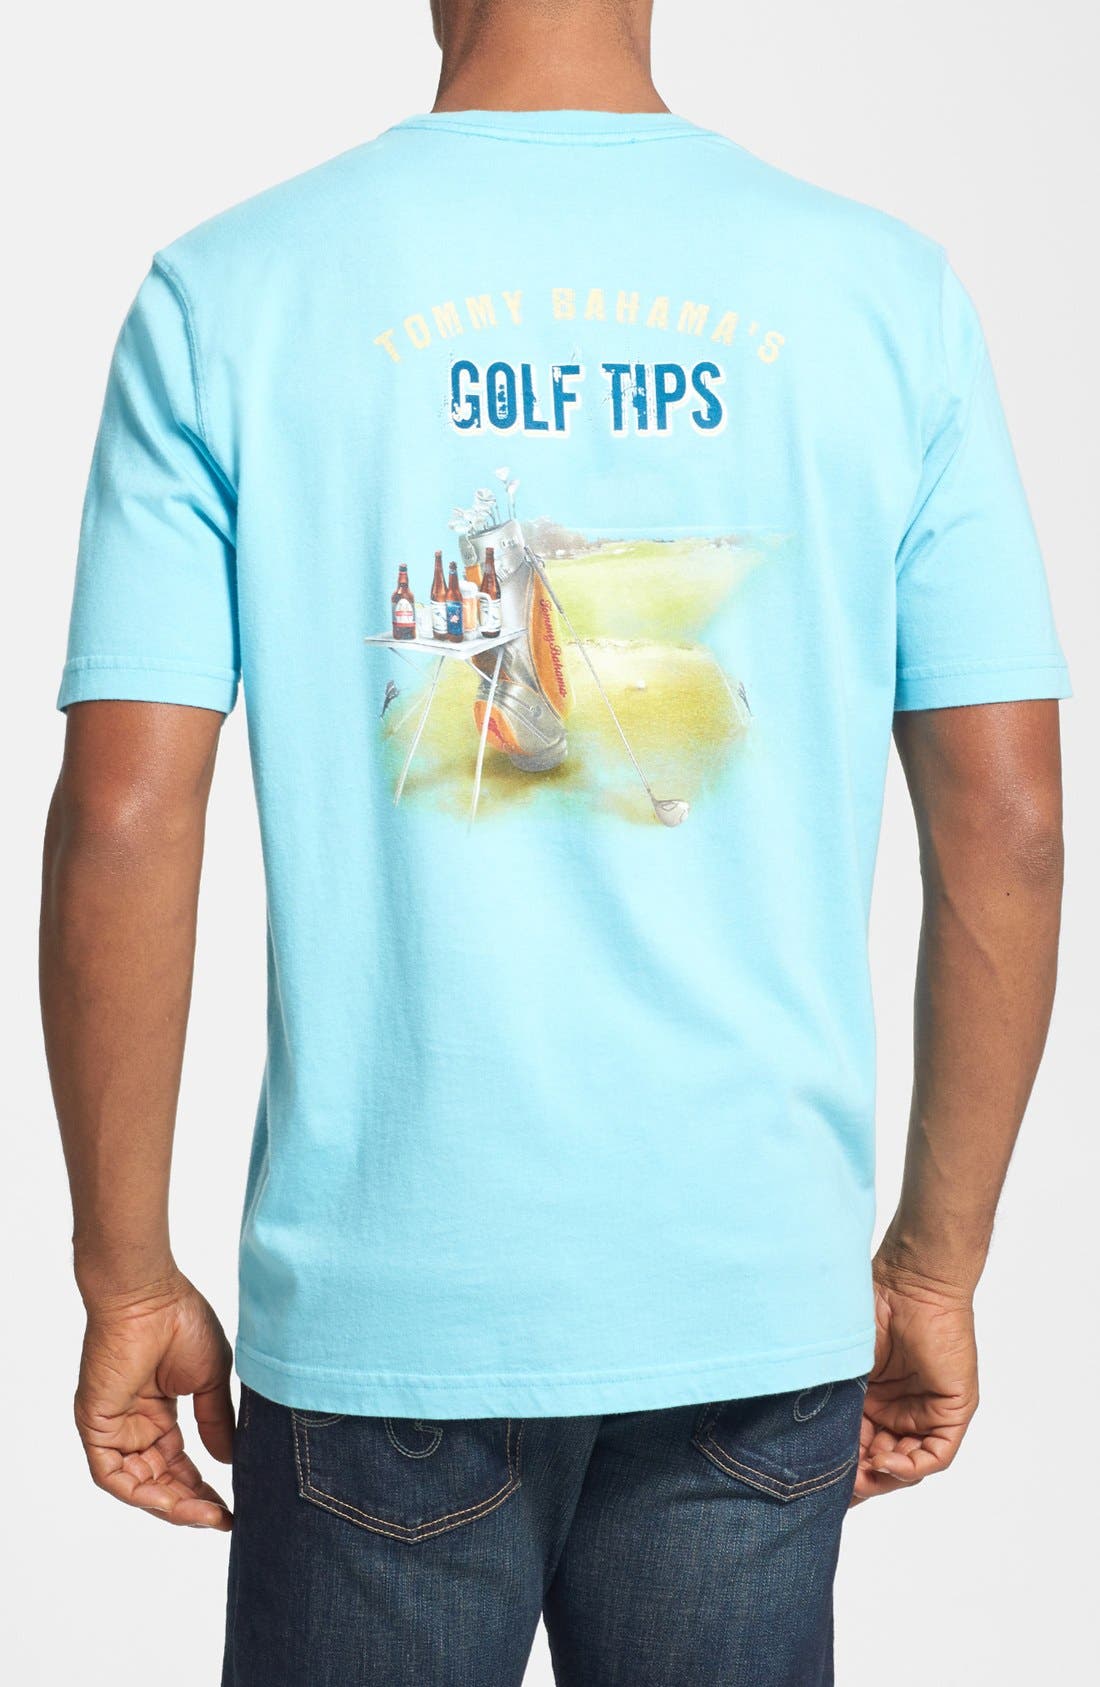 tommy bahama golf t shirts